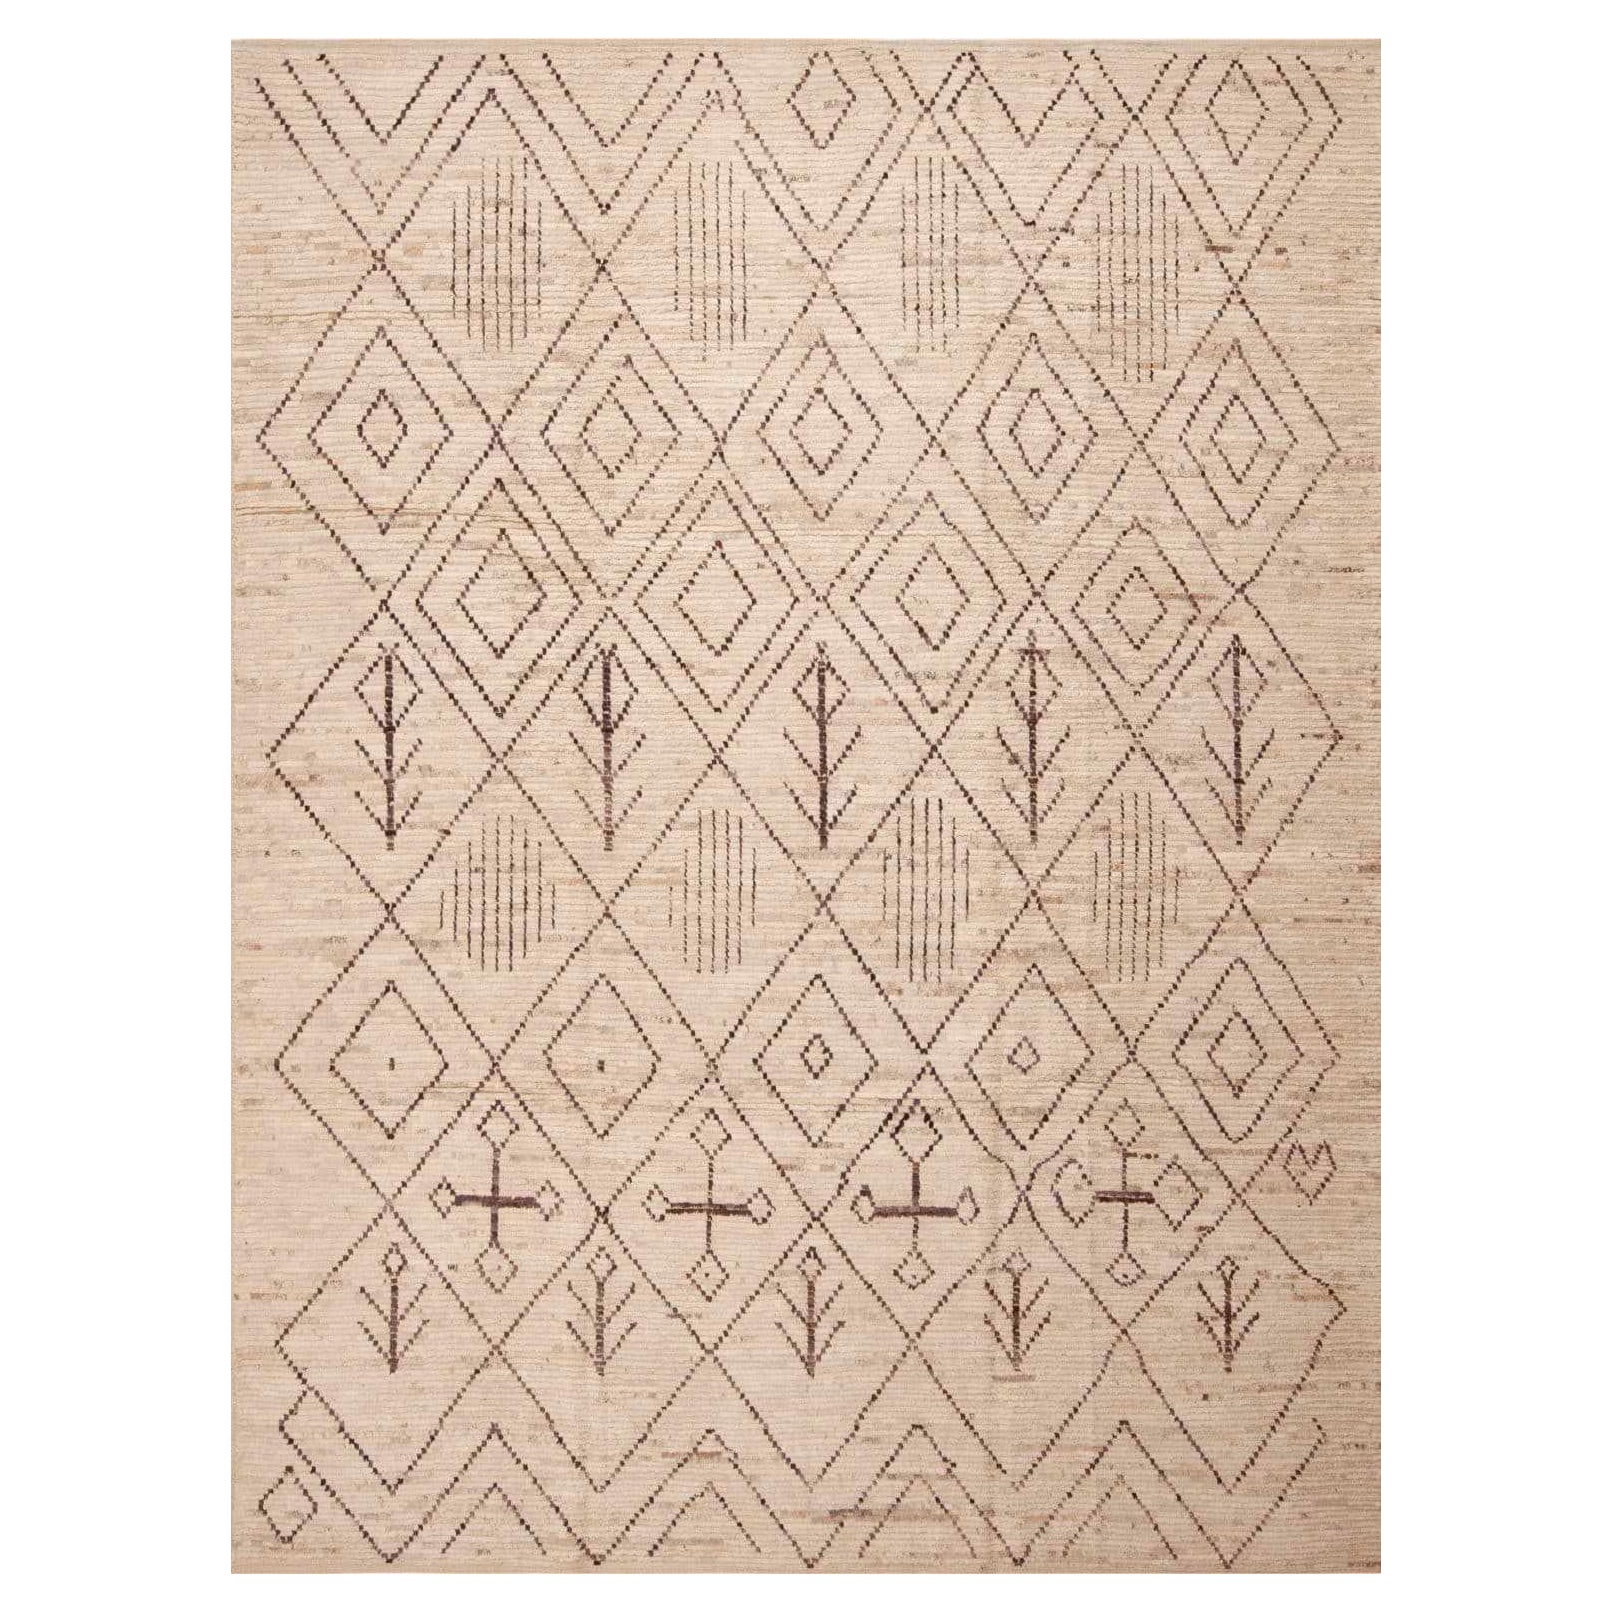 Nazmiyal Collection Modern Tribal Moroccan Beni Ourain Design Rug 9'3" x 12'